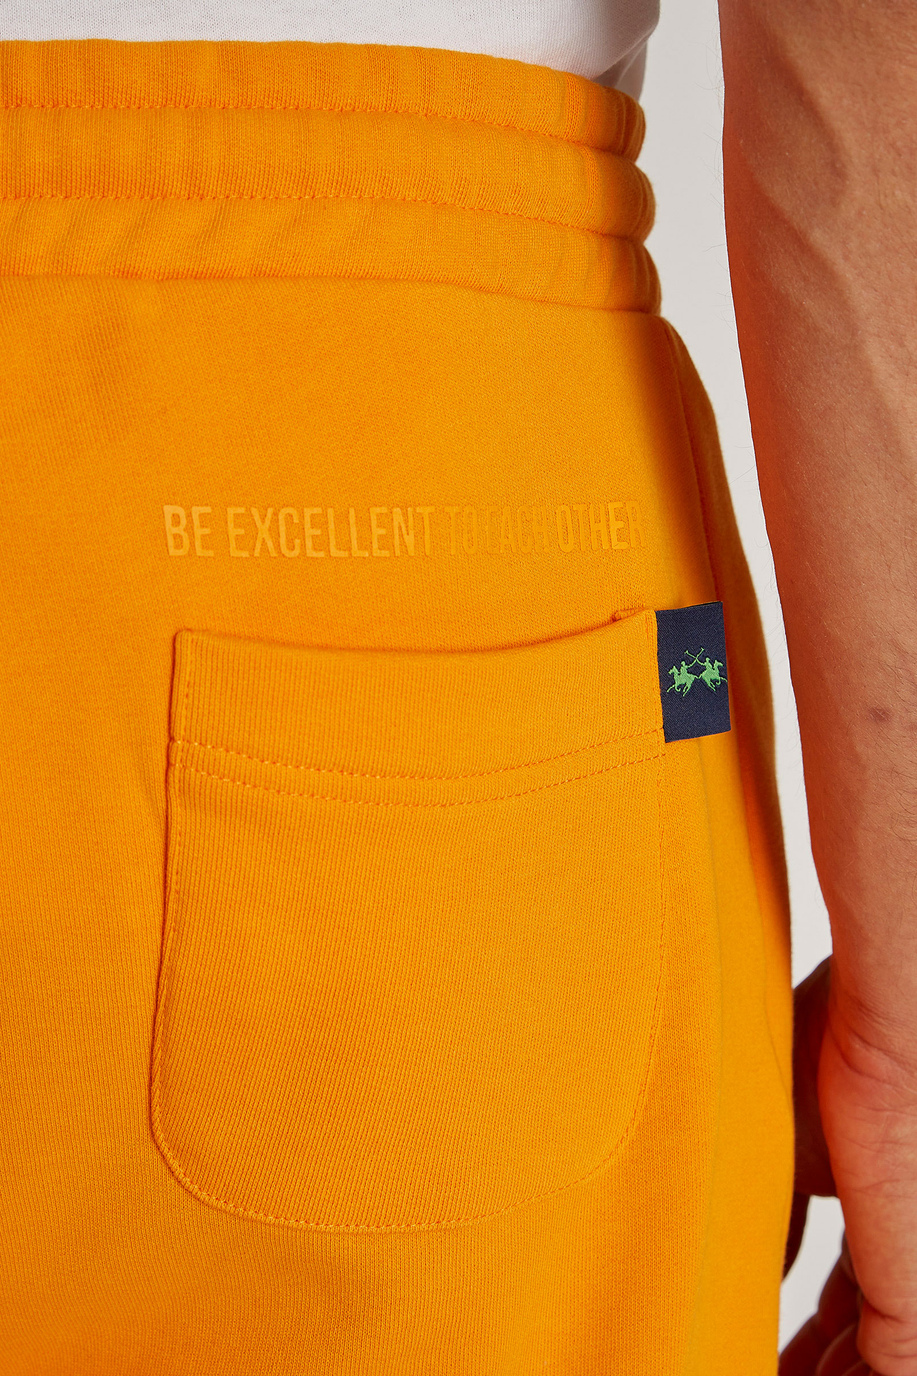 Men's oversized Bermuda shorts in 100% stretch cotton fabric